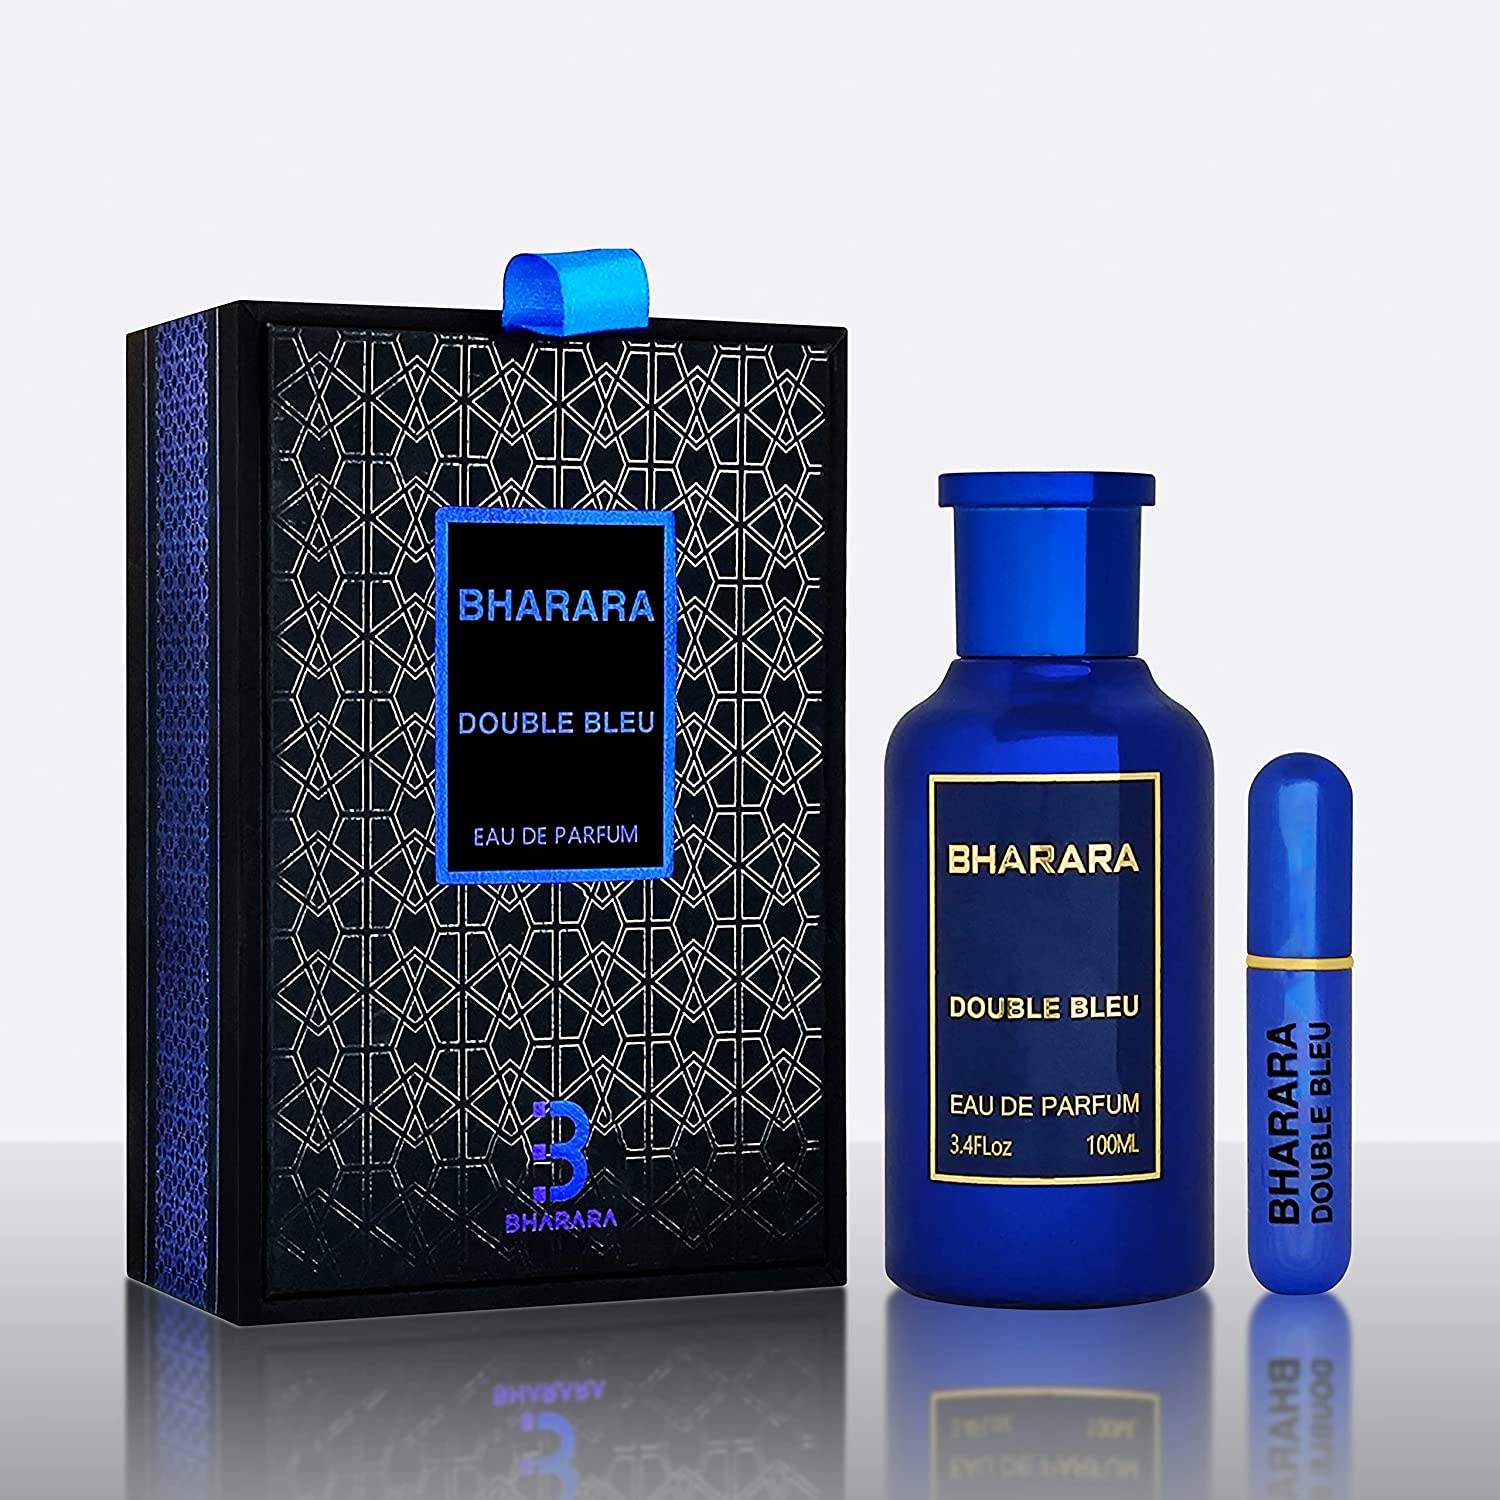 Niche Bharara perfume - a fragrance for women and men 2021